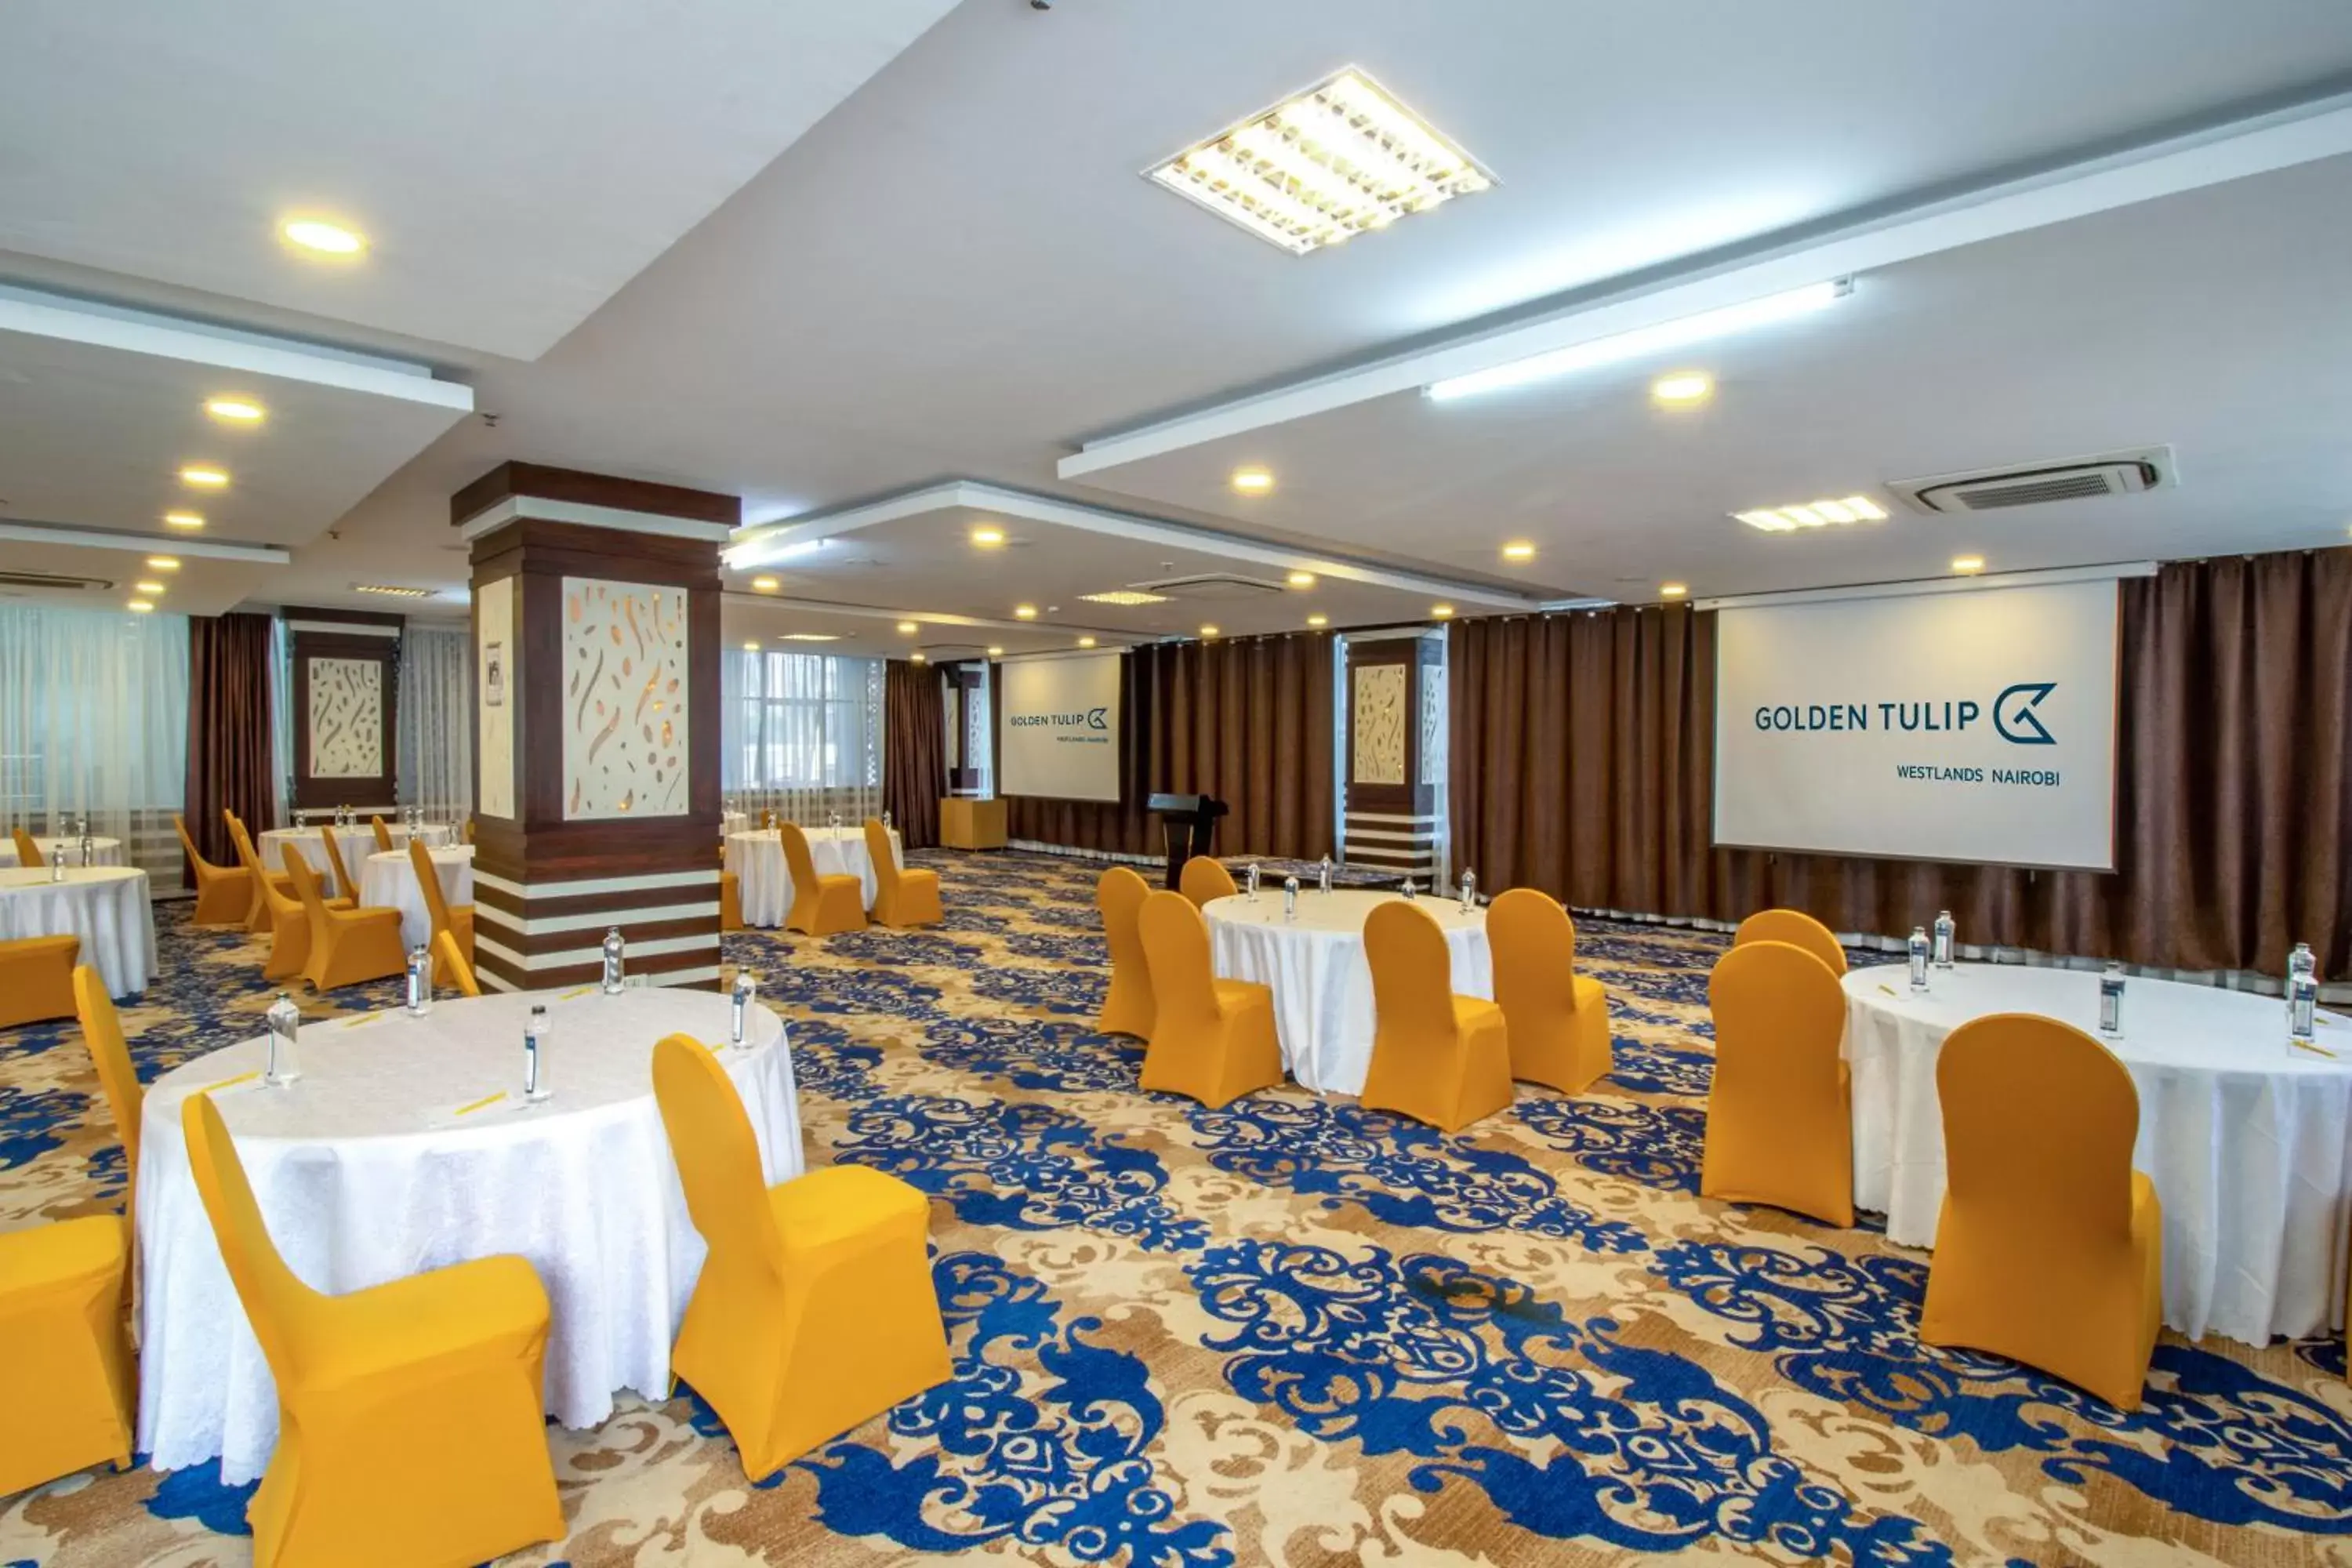 Meeting/conference room, Banquet Facilities in Golden Tulip Westlands Nairobi